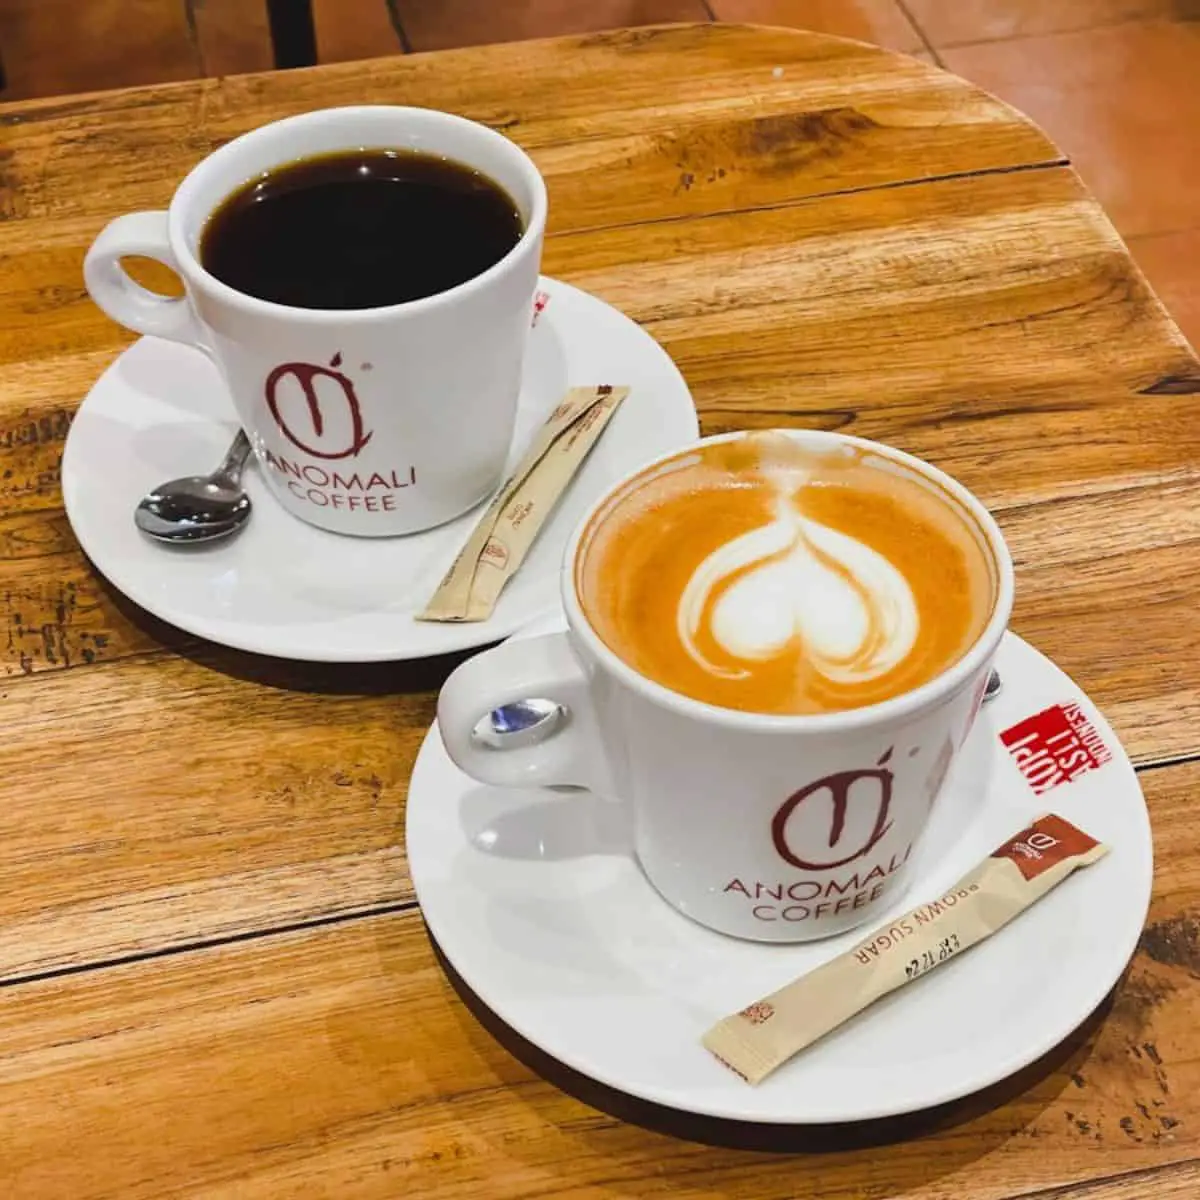 Cikuray brew coffee and Bali latte Anomali Coffee